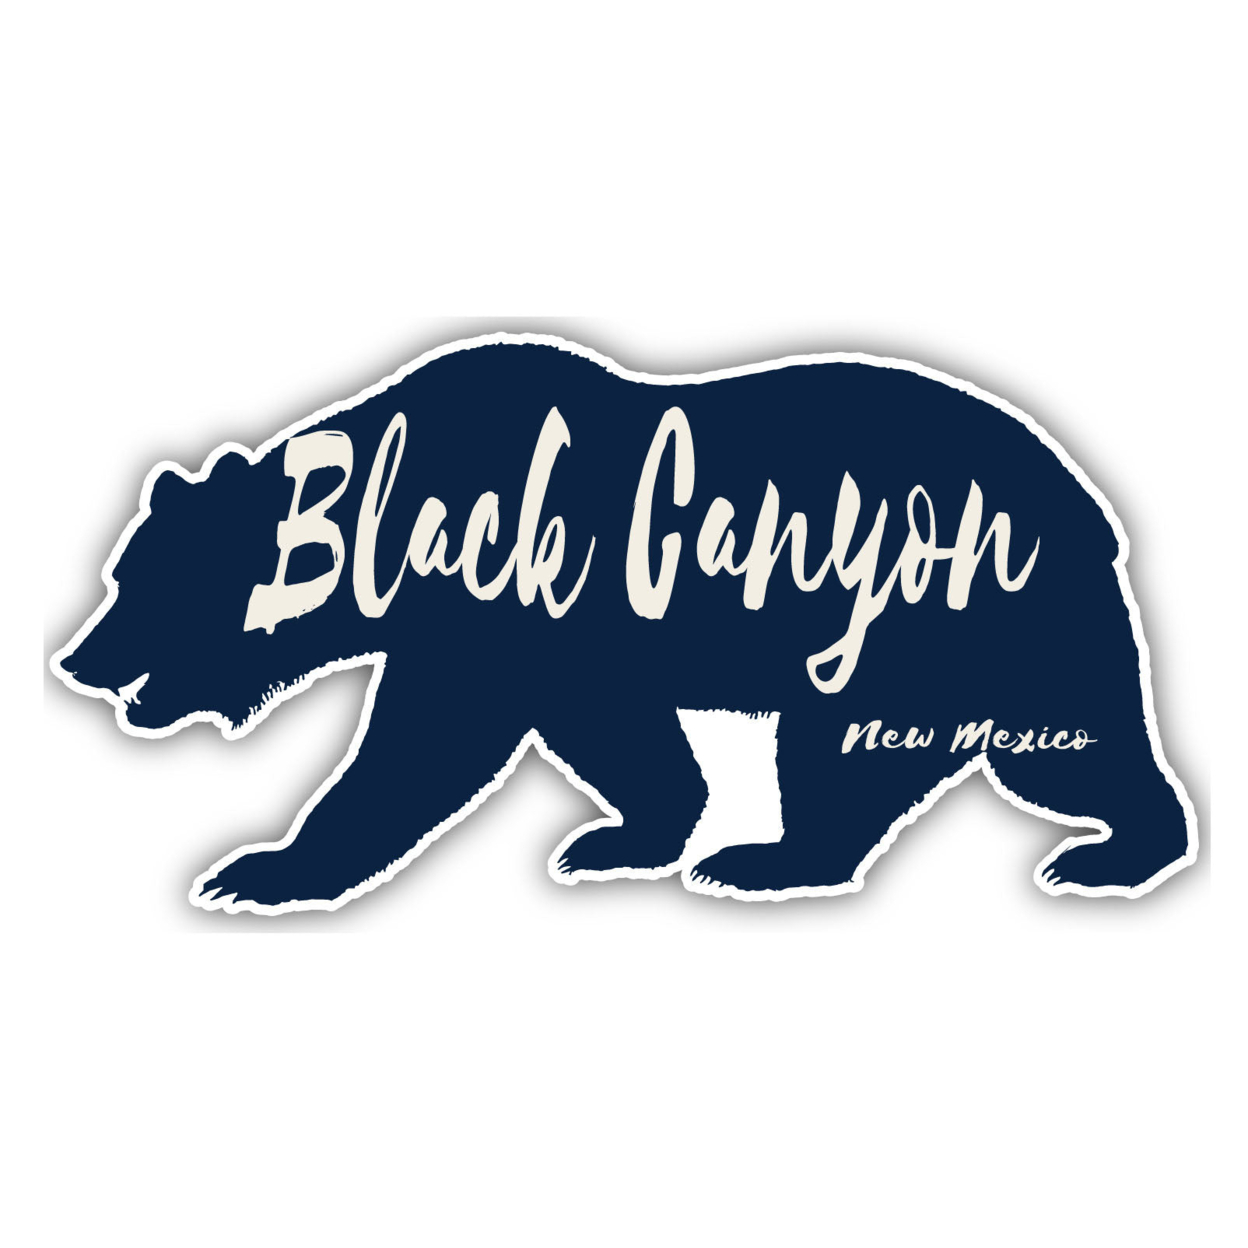 Black Canyon New Mexico Souvenir Decorative Stickers (Choose Theme And Size) - Single Unit, 4-Inch, Bear